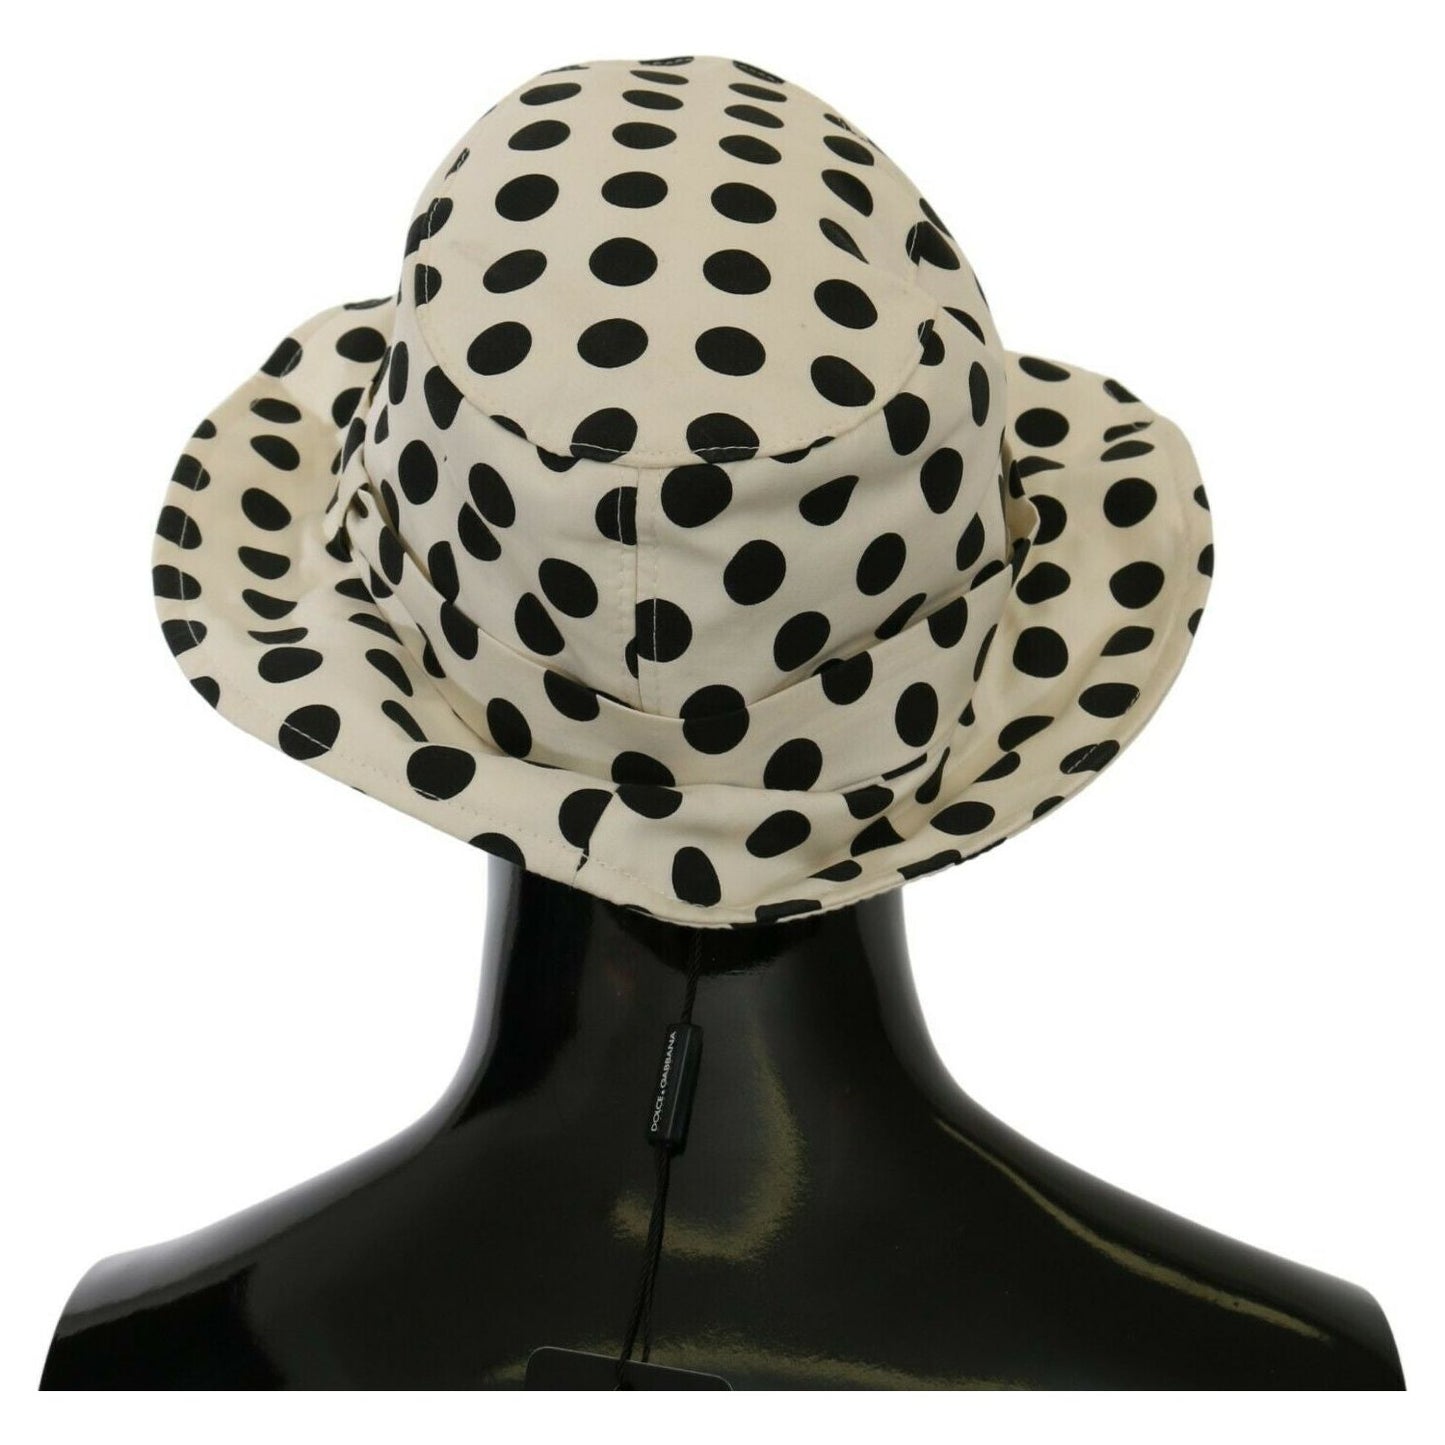 Dolce & Gabbana Chic Black Polka Dot Trilby Hat white-100-cotton-polka-dot-design-trilby-hat